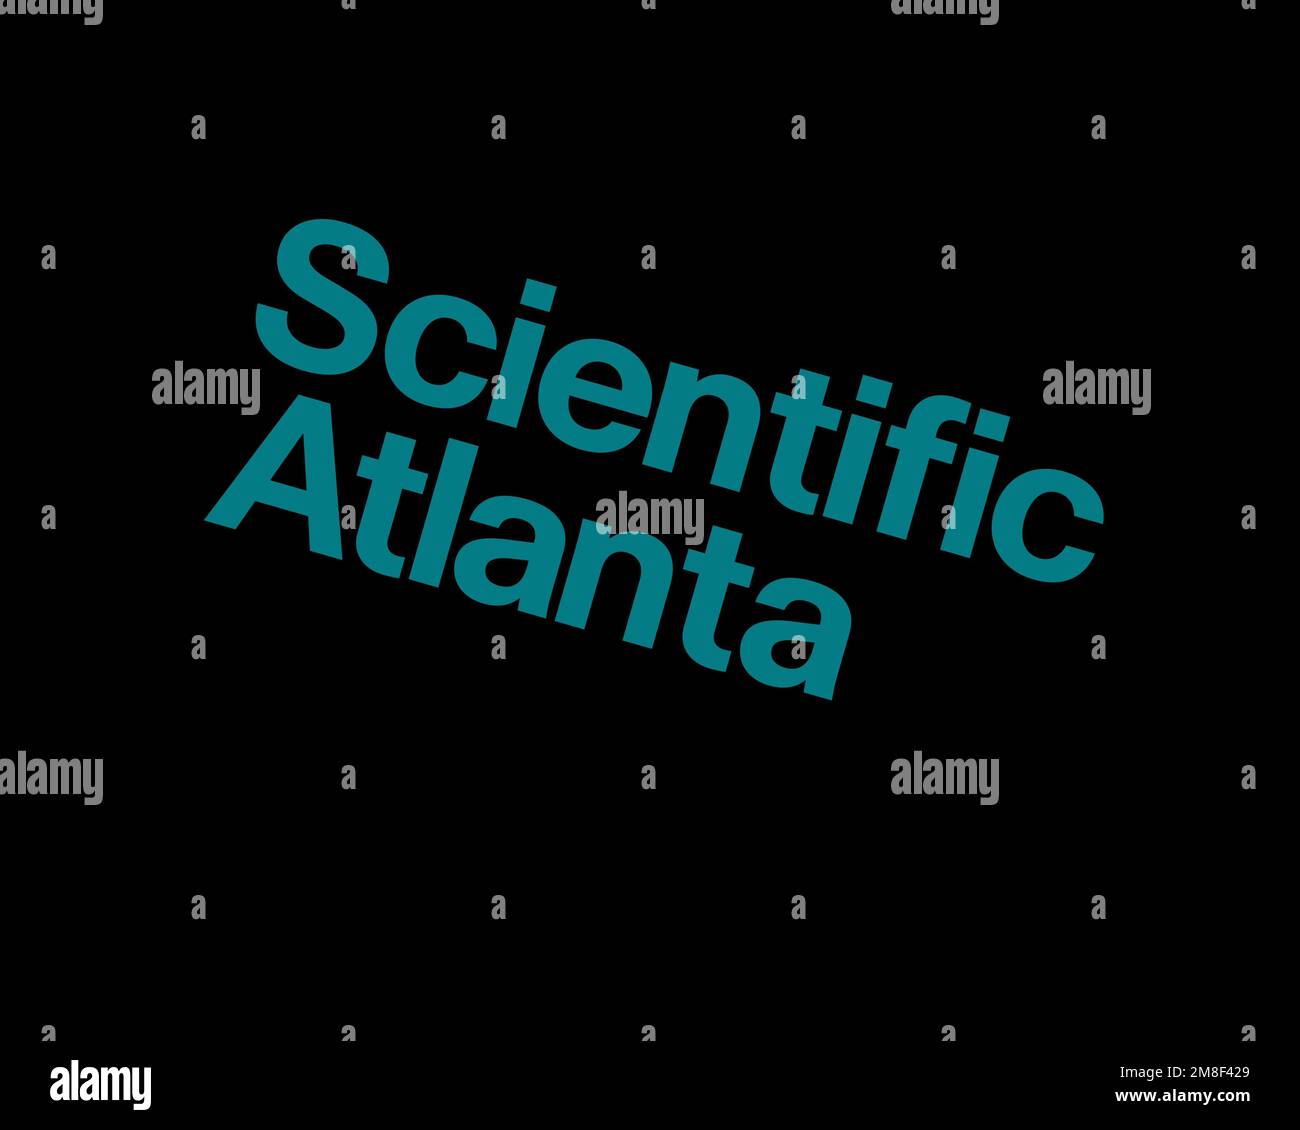 Scientific Atlanta, rotated logo, black background B Stock Photo